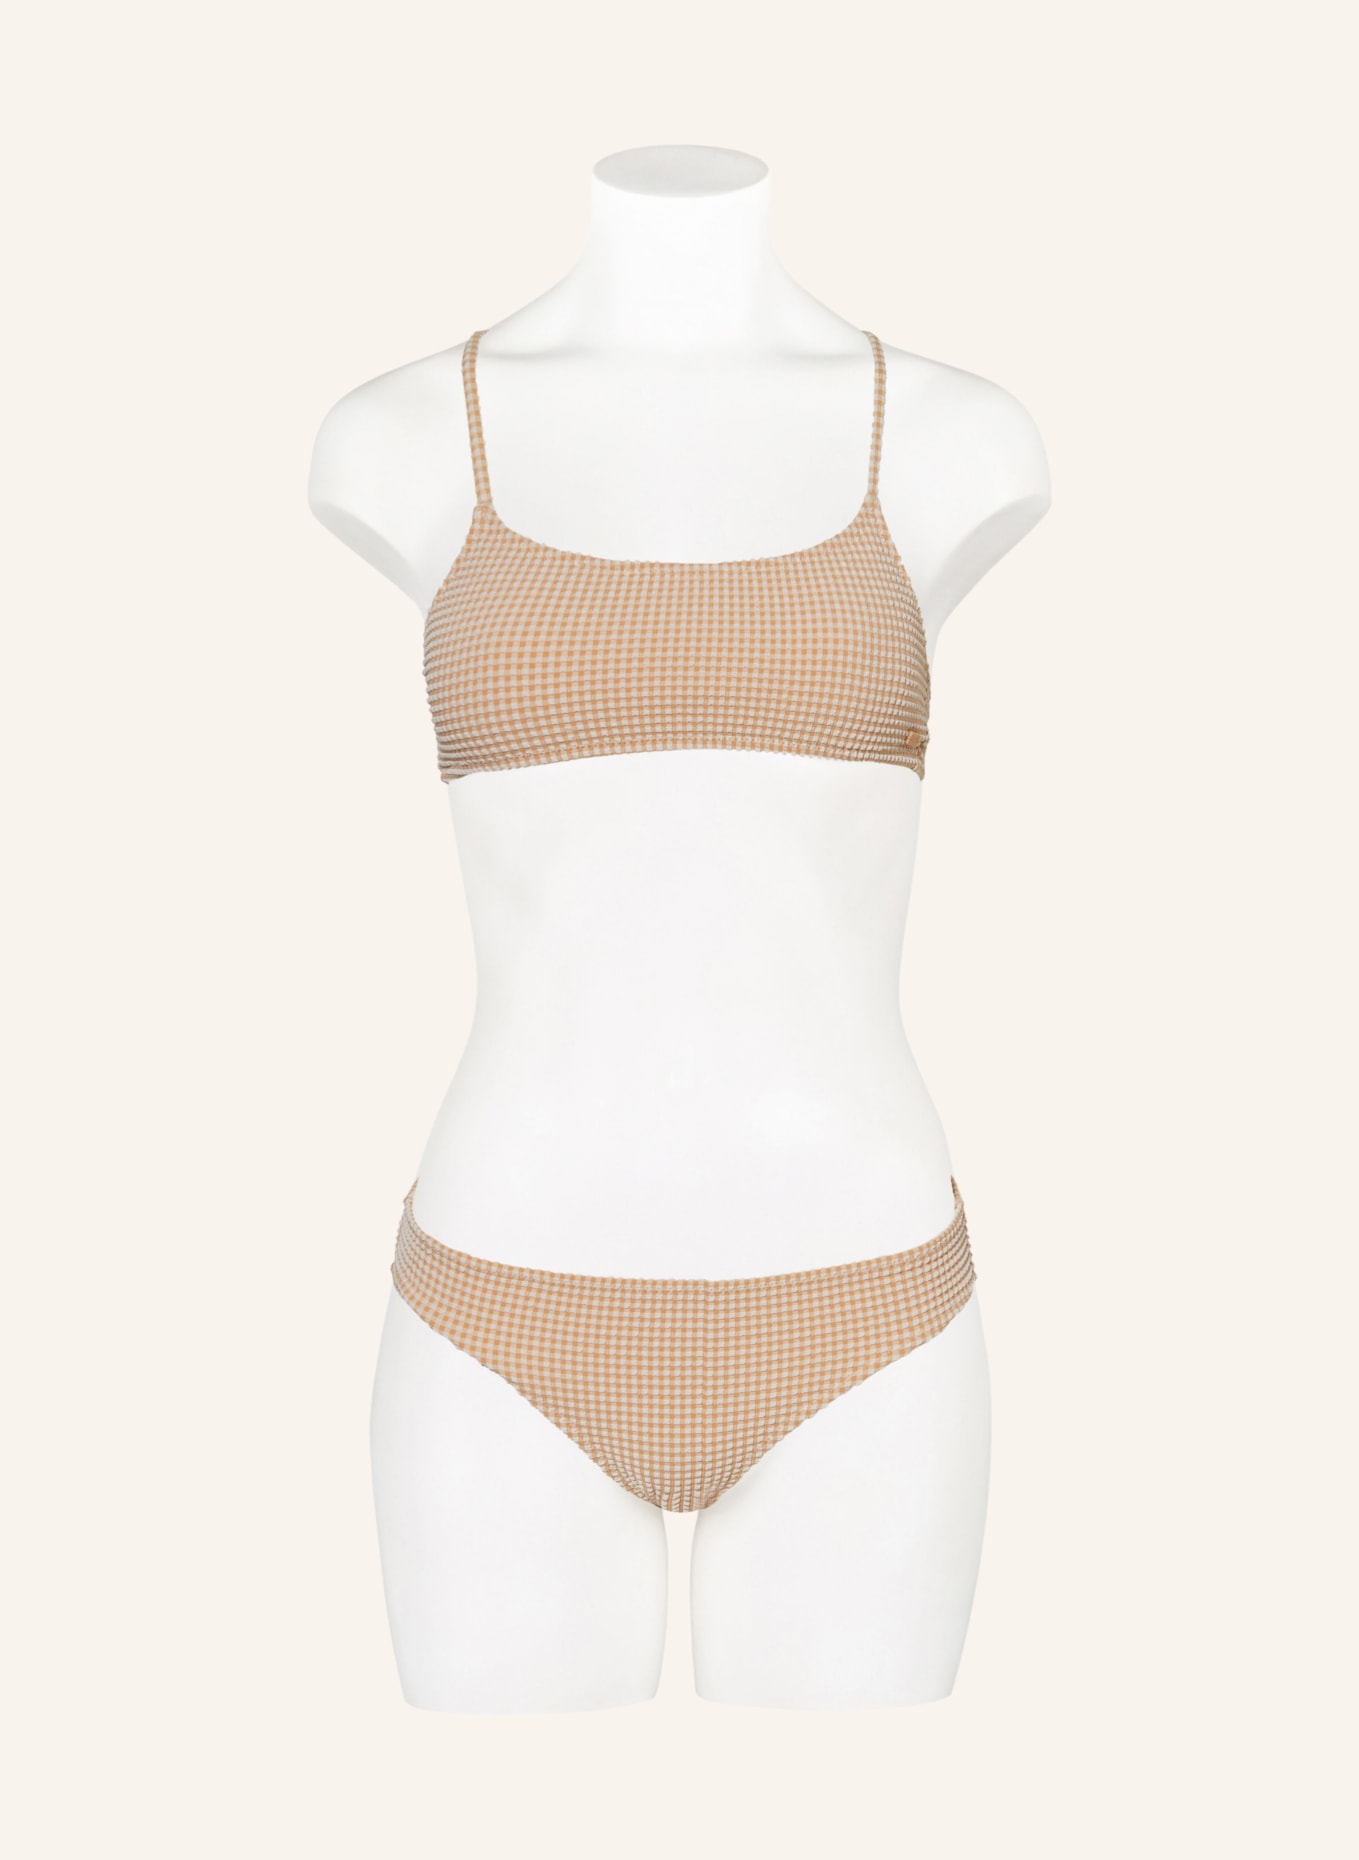 ROXY Bralette-Bikini-Top GINGHAM, Farbe: NUDE/ WEISS (Bild 2)